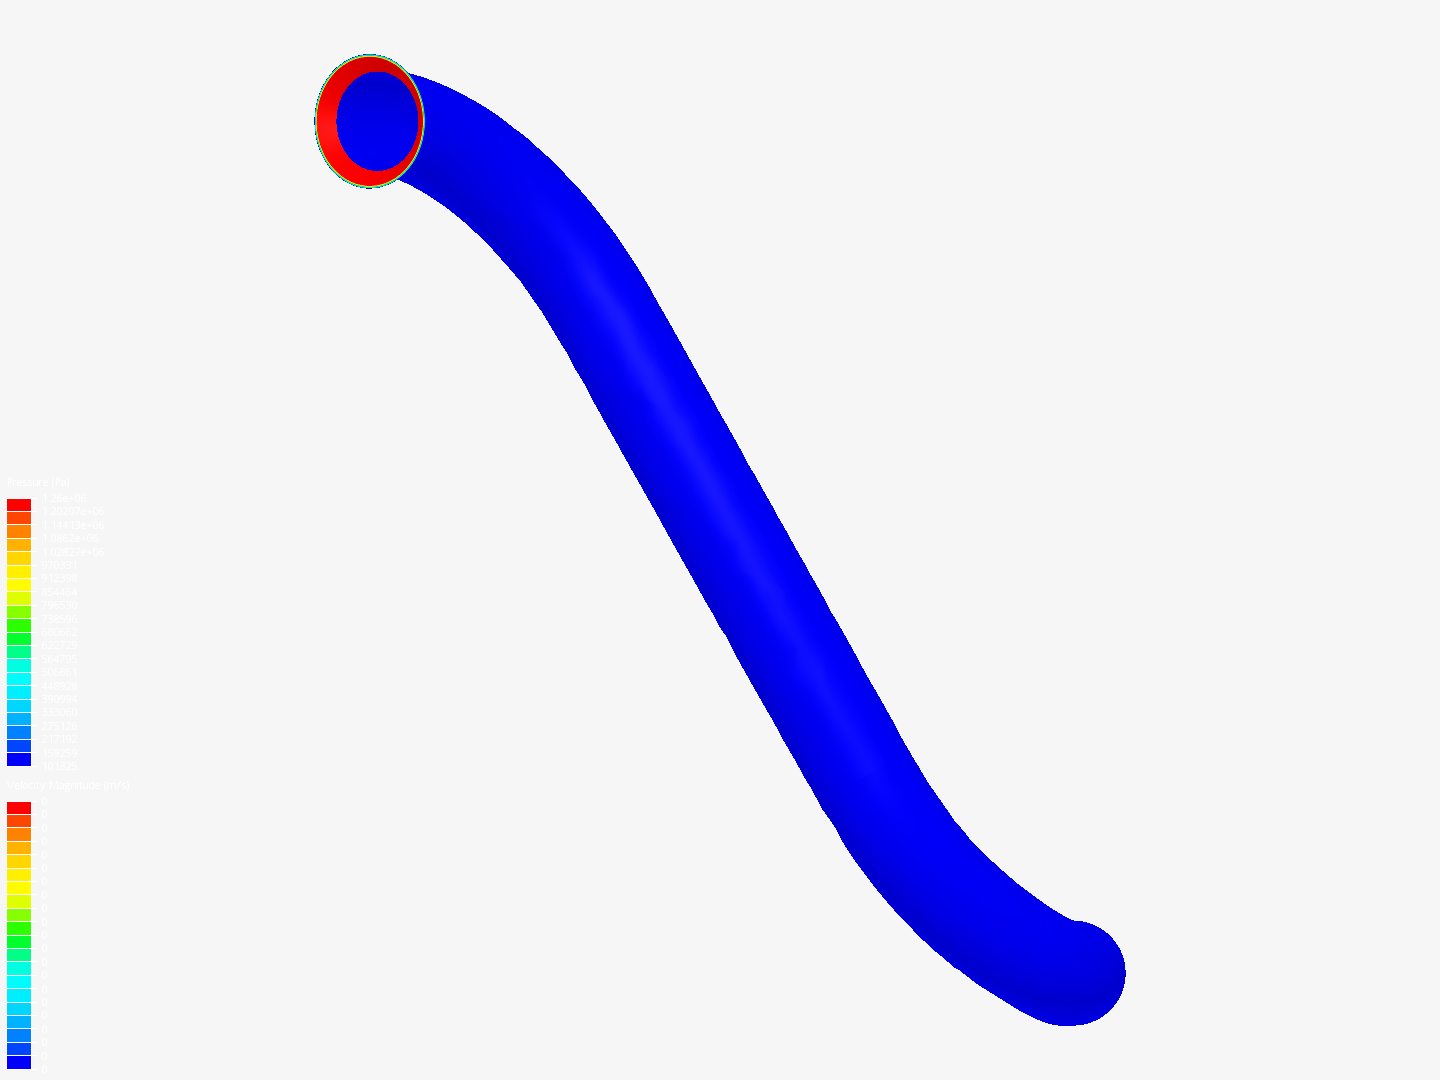 Primary pipe sim image